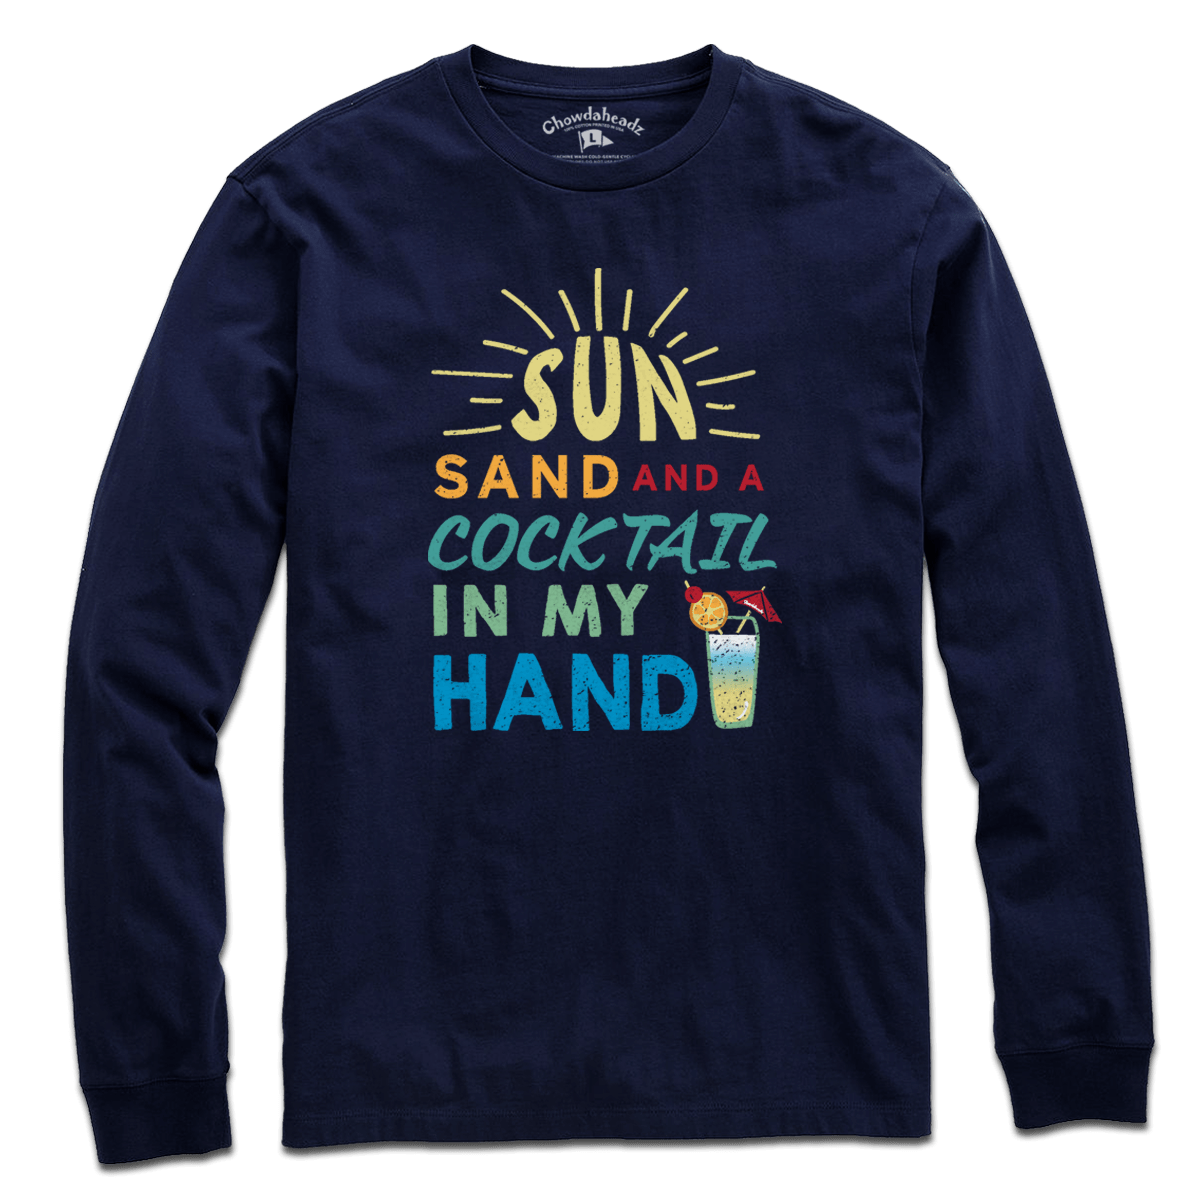 Sun, Sand & A Cocktail In My Hand T-Shirt - Chowdaheadz